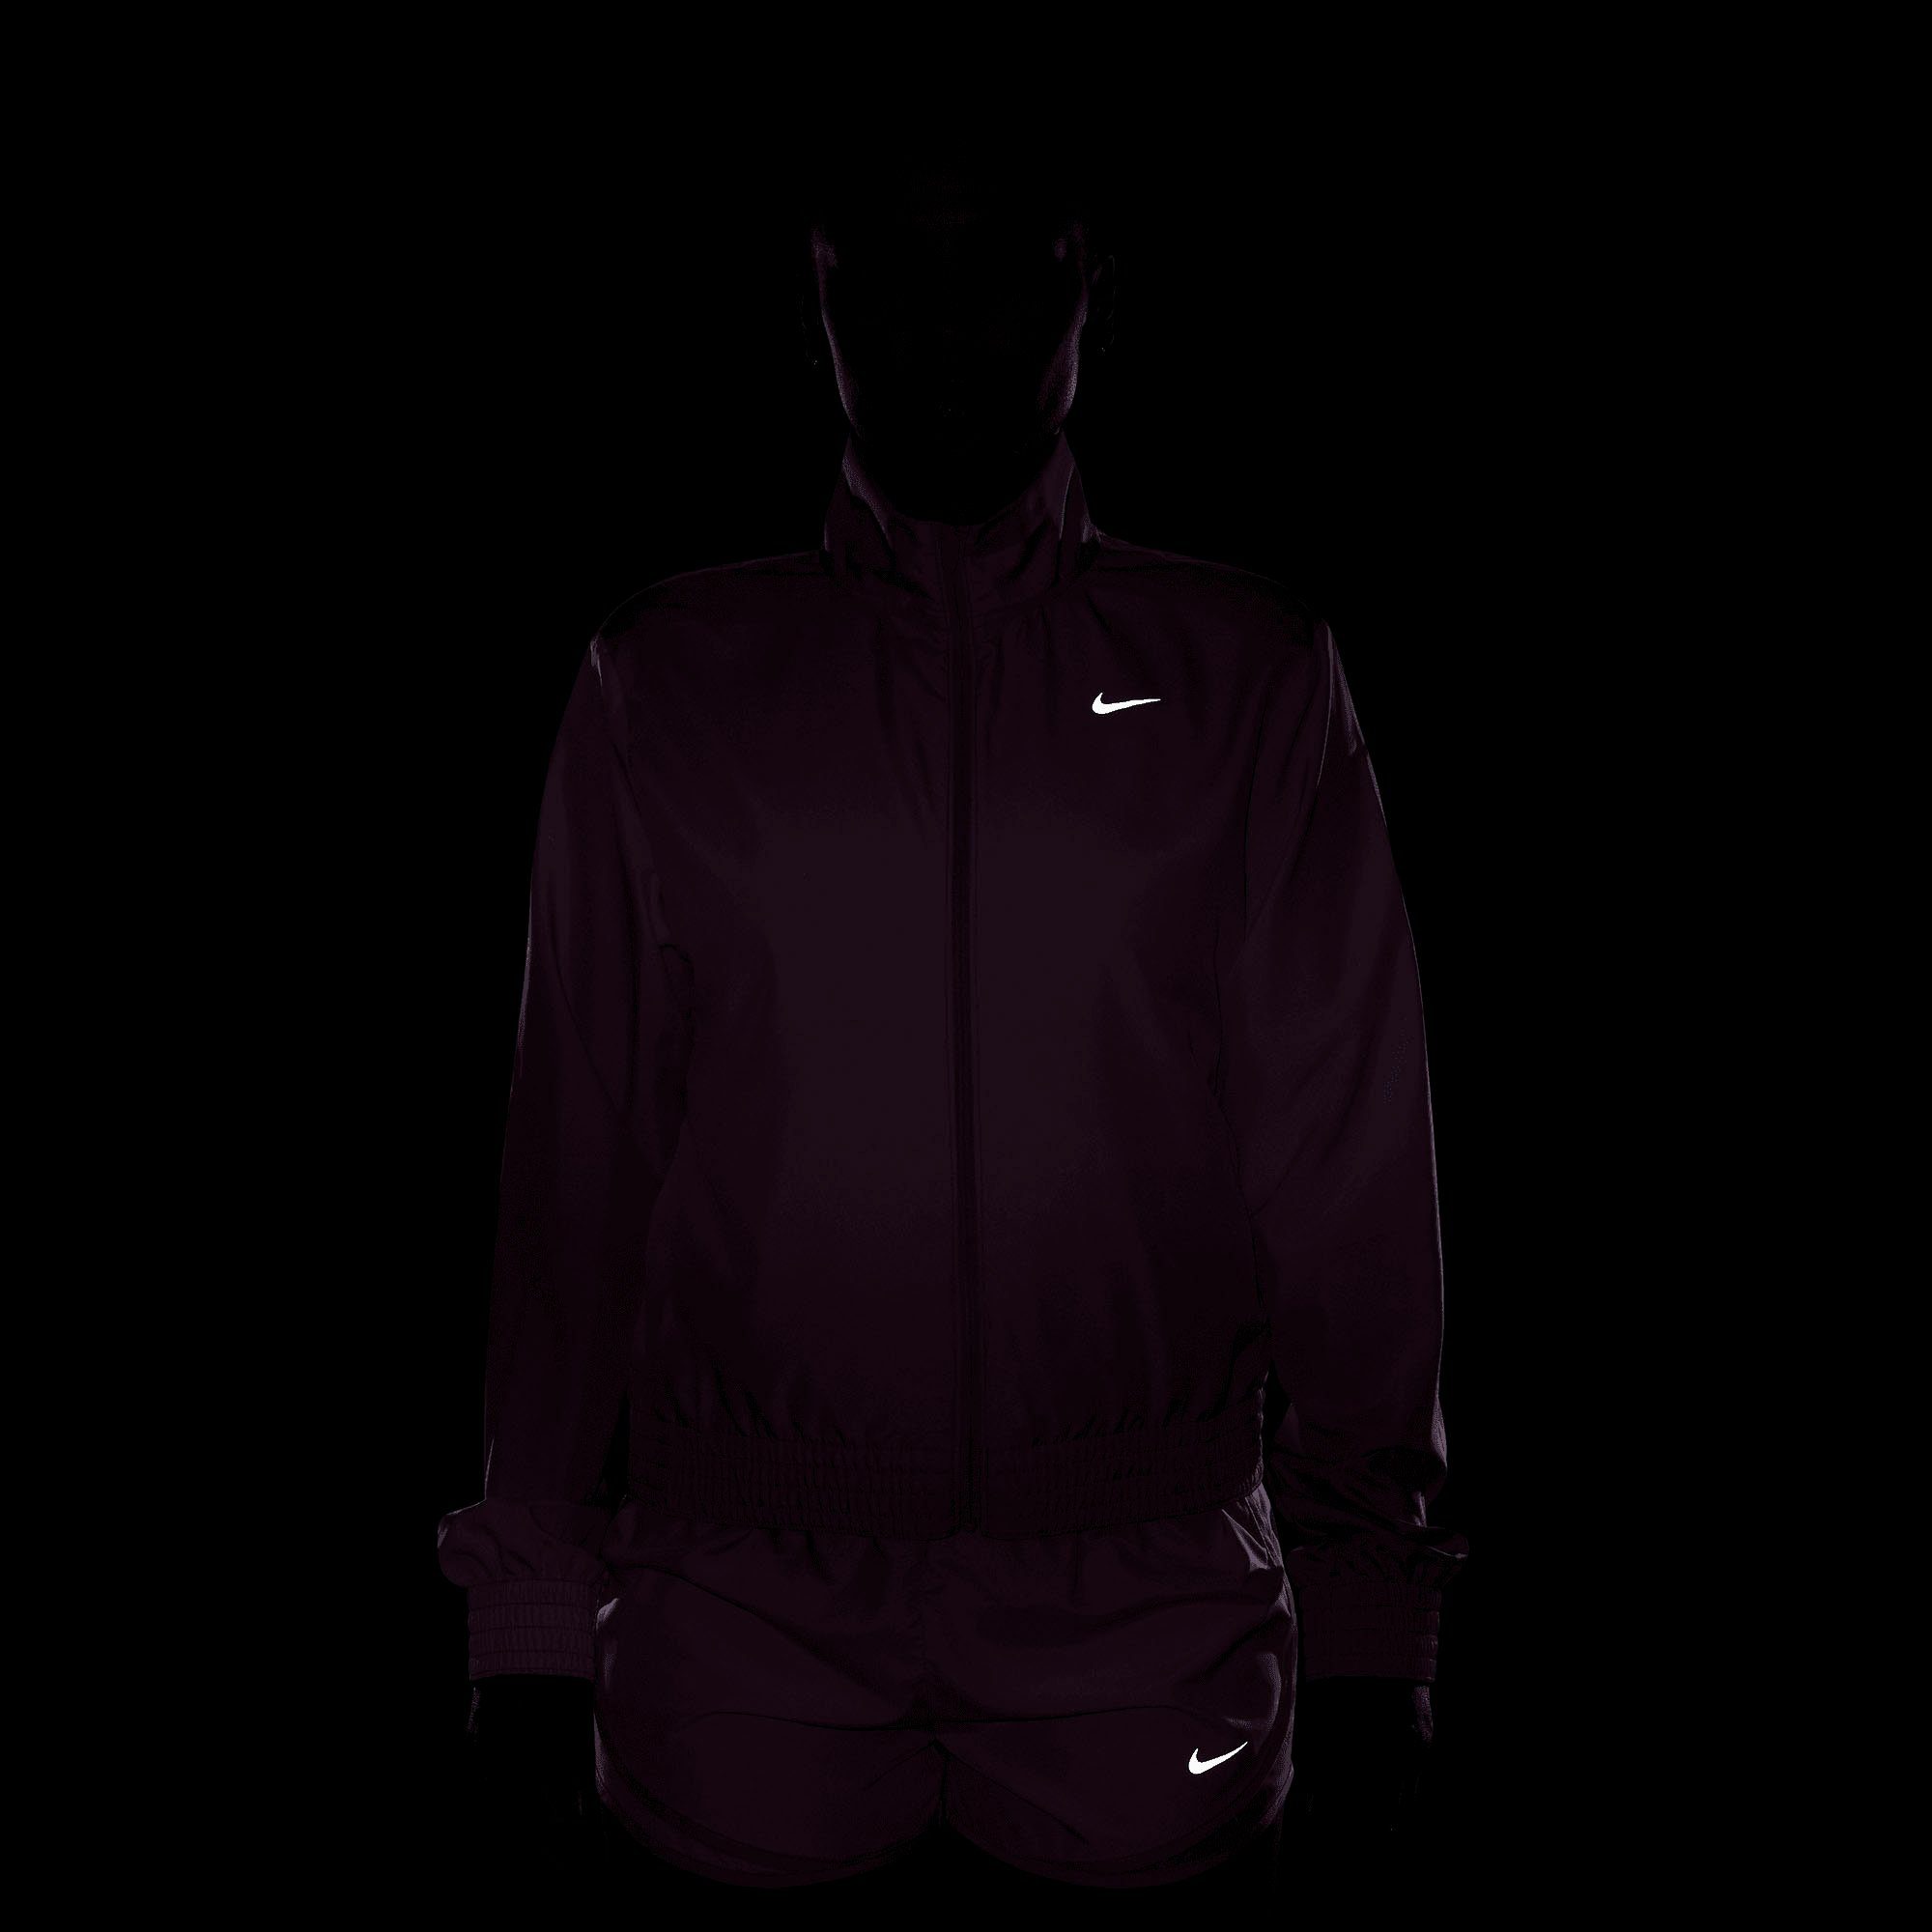 SILV Women's Running Swoosh Laufjacke Run Dri-FIT FUCHSIA/REFLECTIVE ACTIVE Nike Printed Jacket